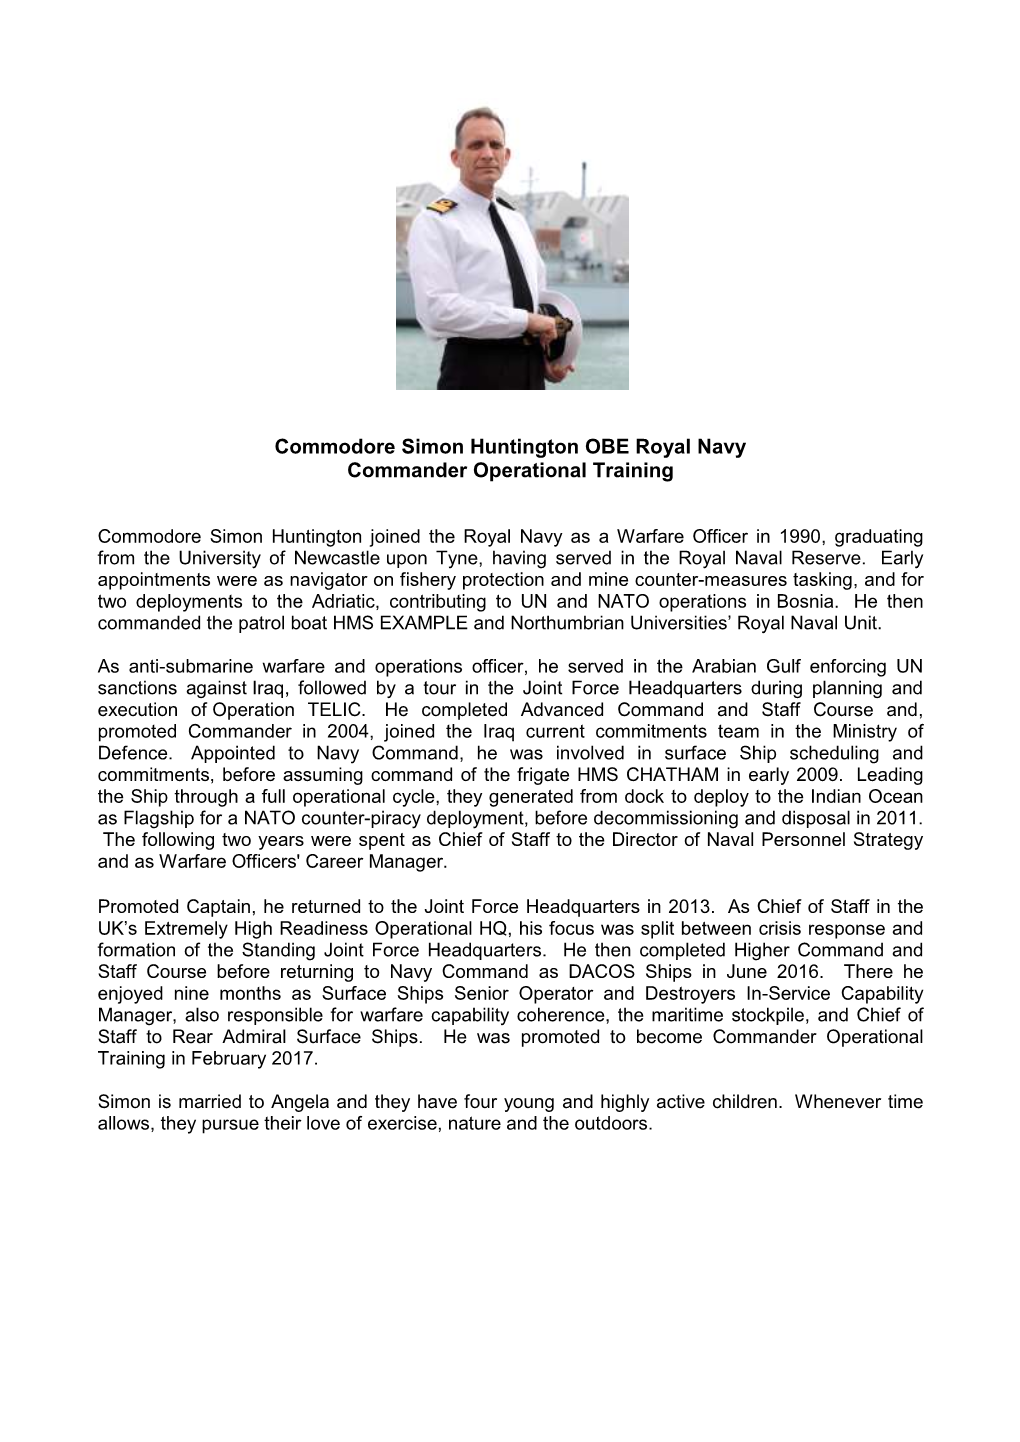 Commodore Simon Huntington OBE Royal Navy Commander Operational Training